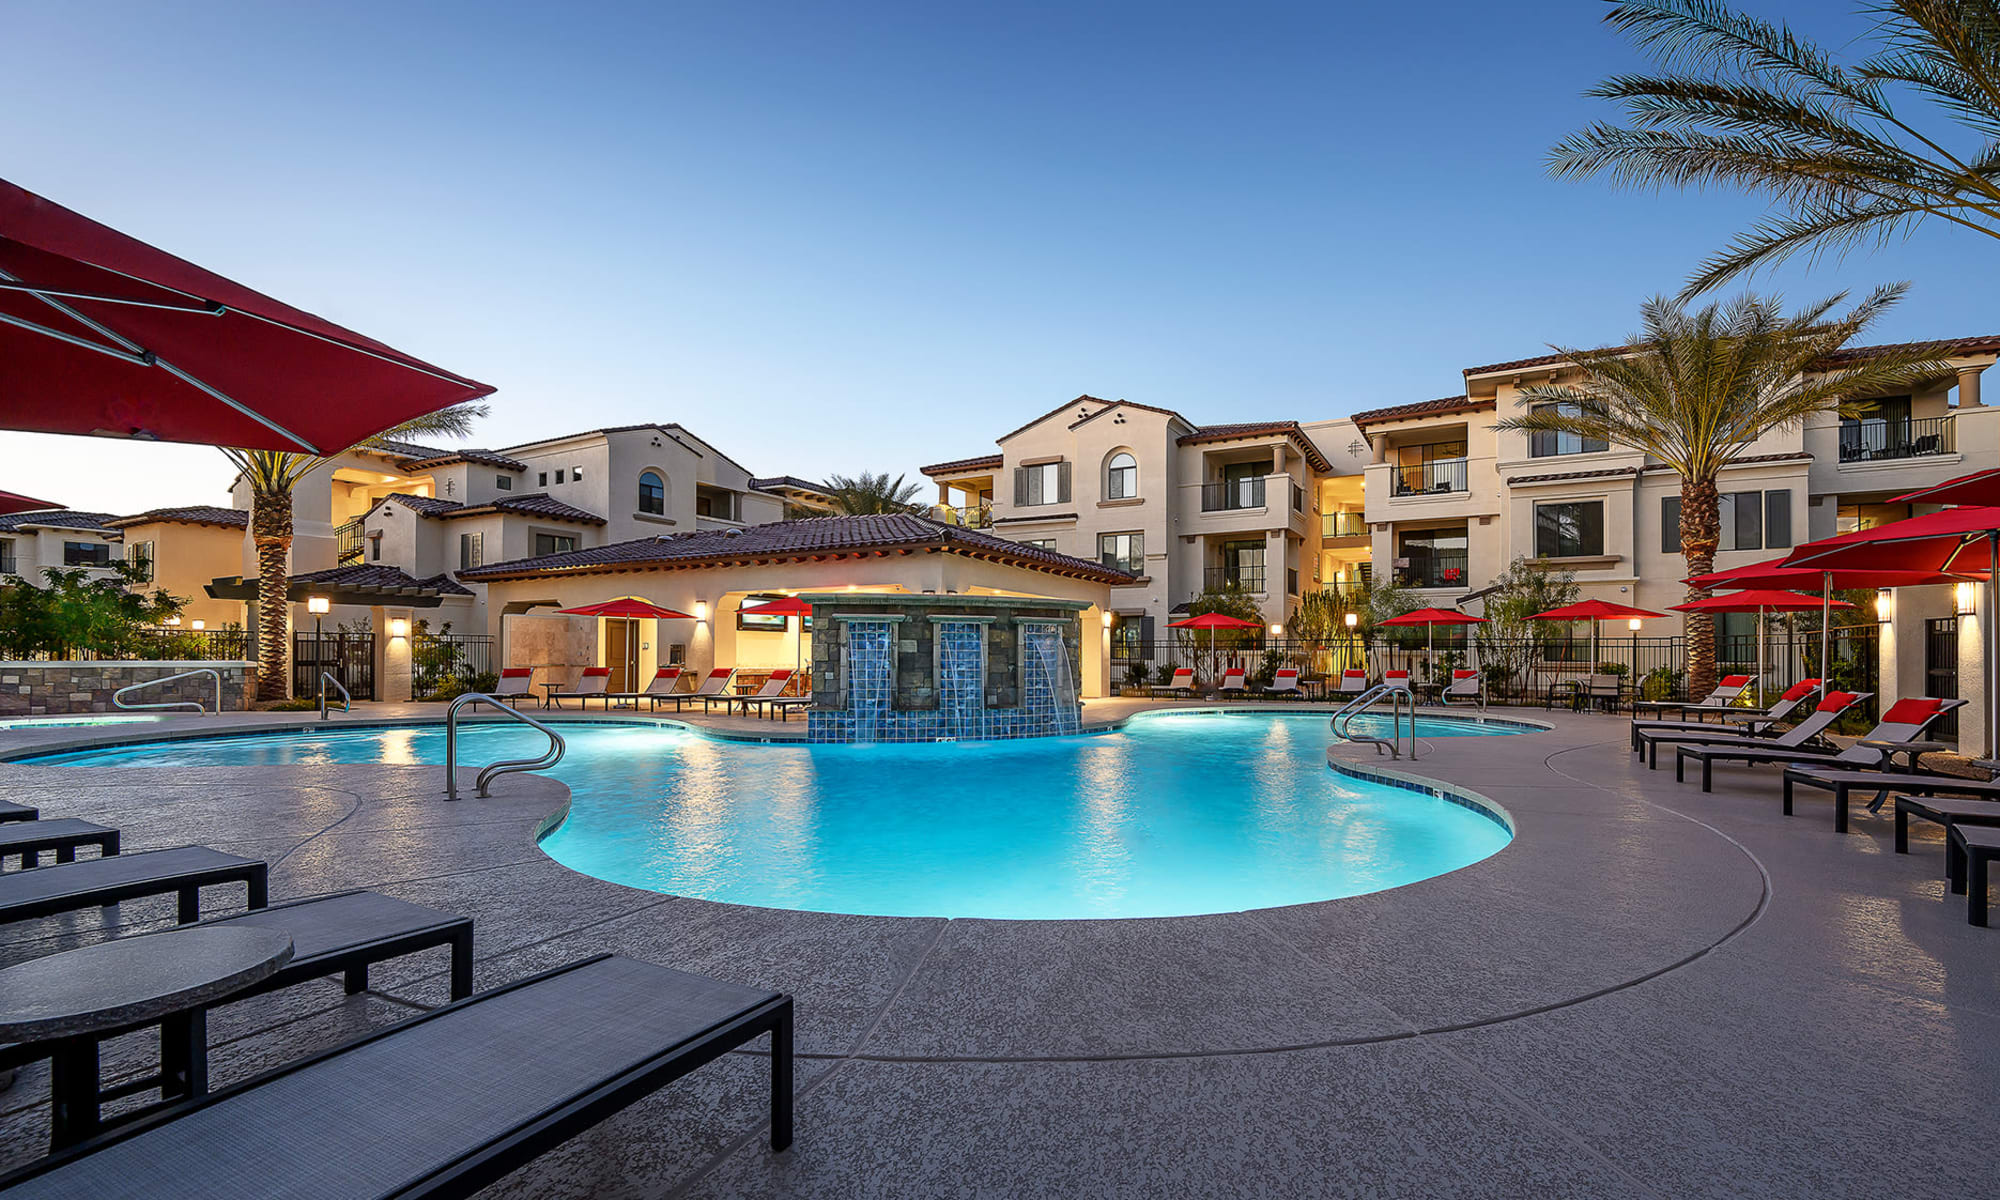 Resort-style pool at San Bellara in Scottsdale, Arizona